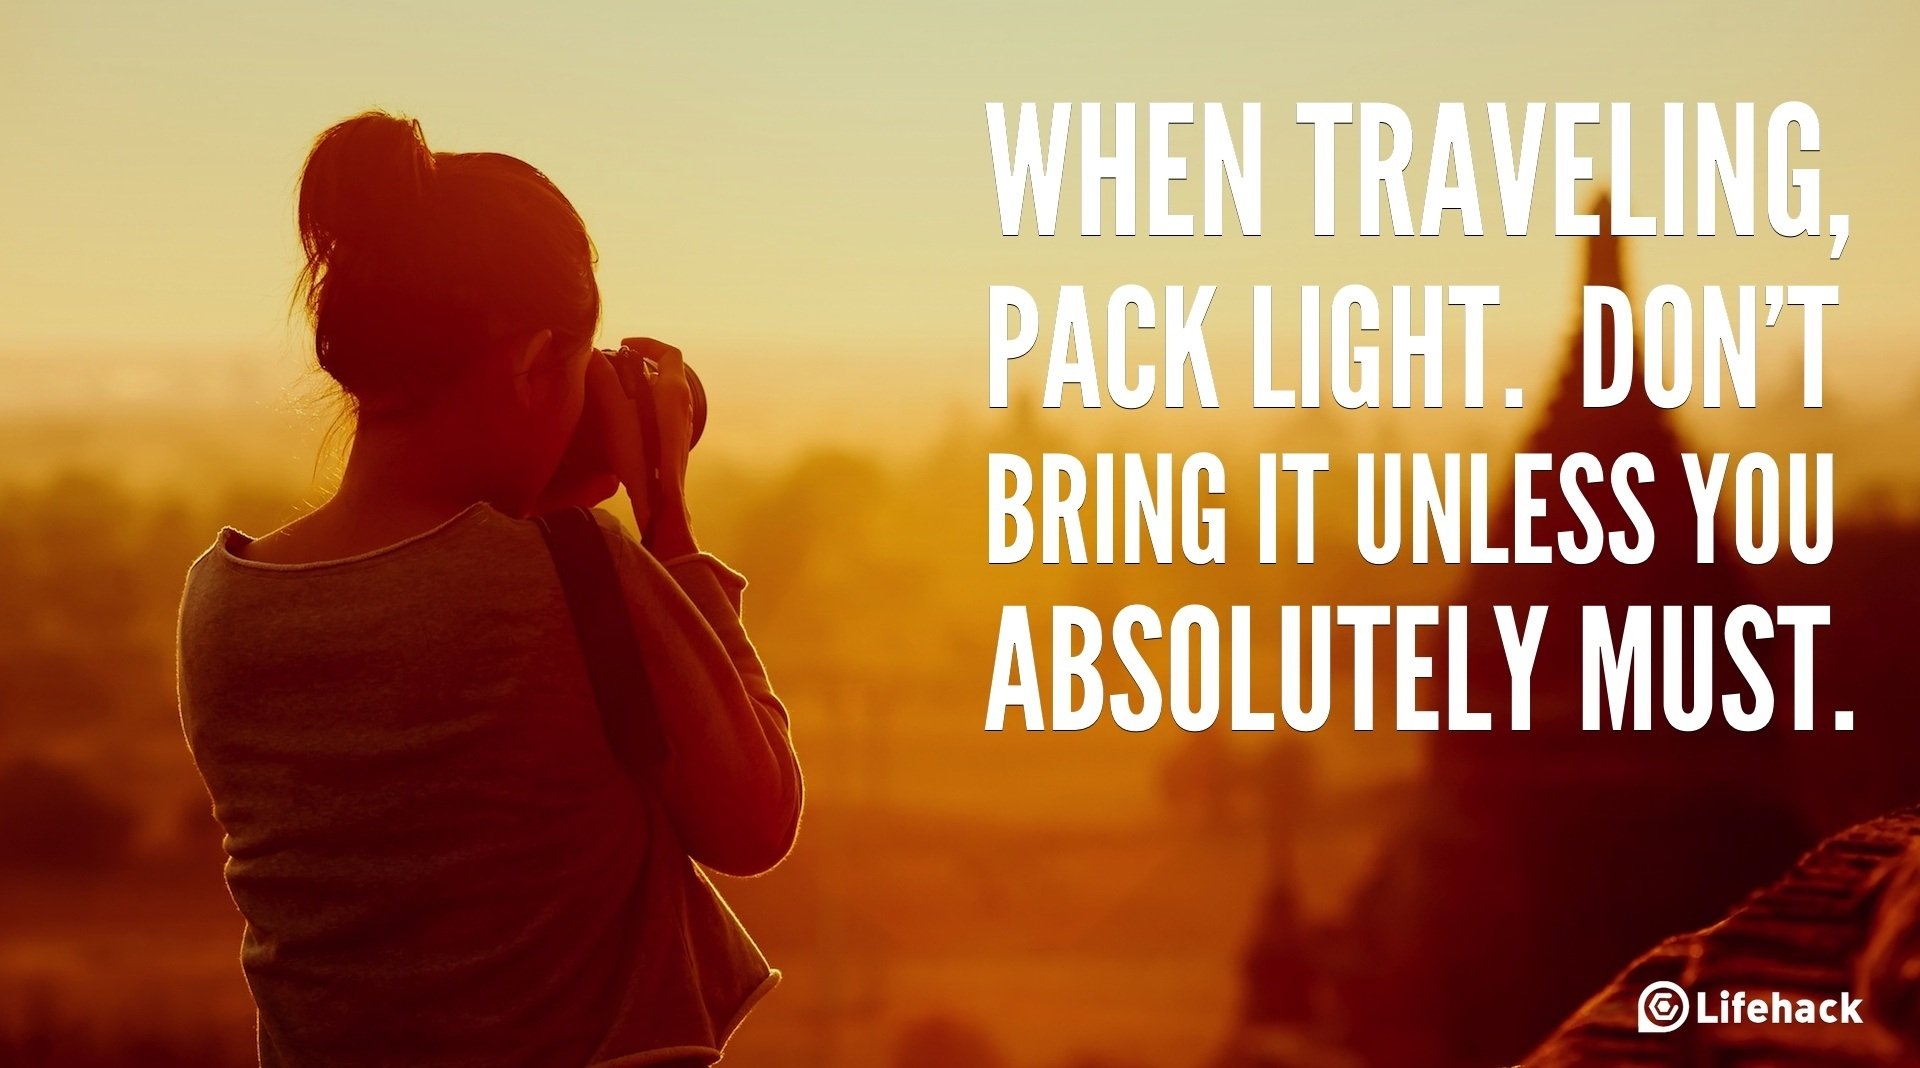 30sec Tip: When Traveling, Pack Light